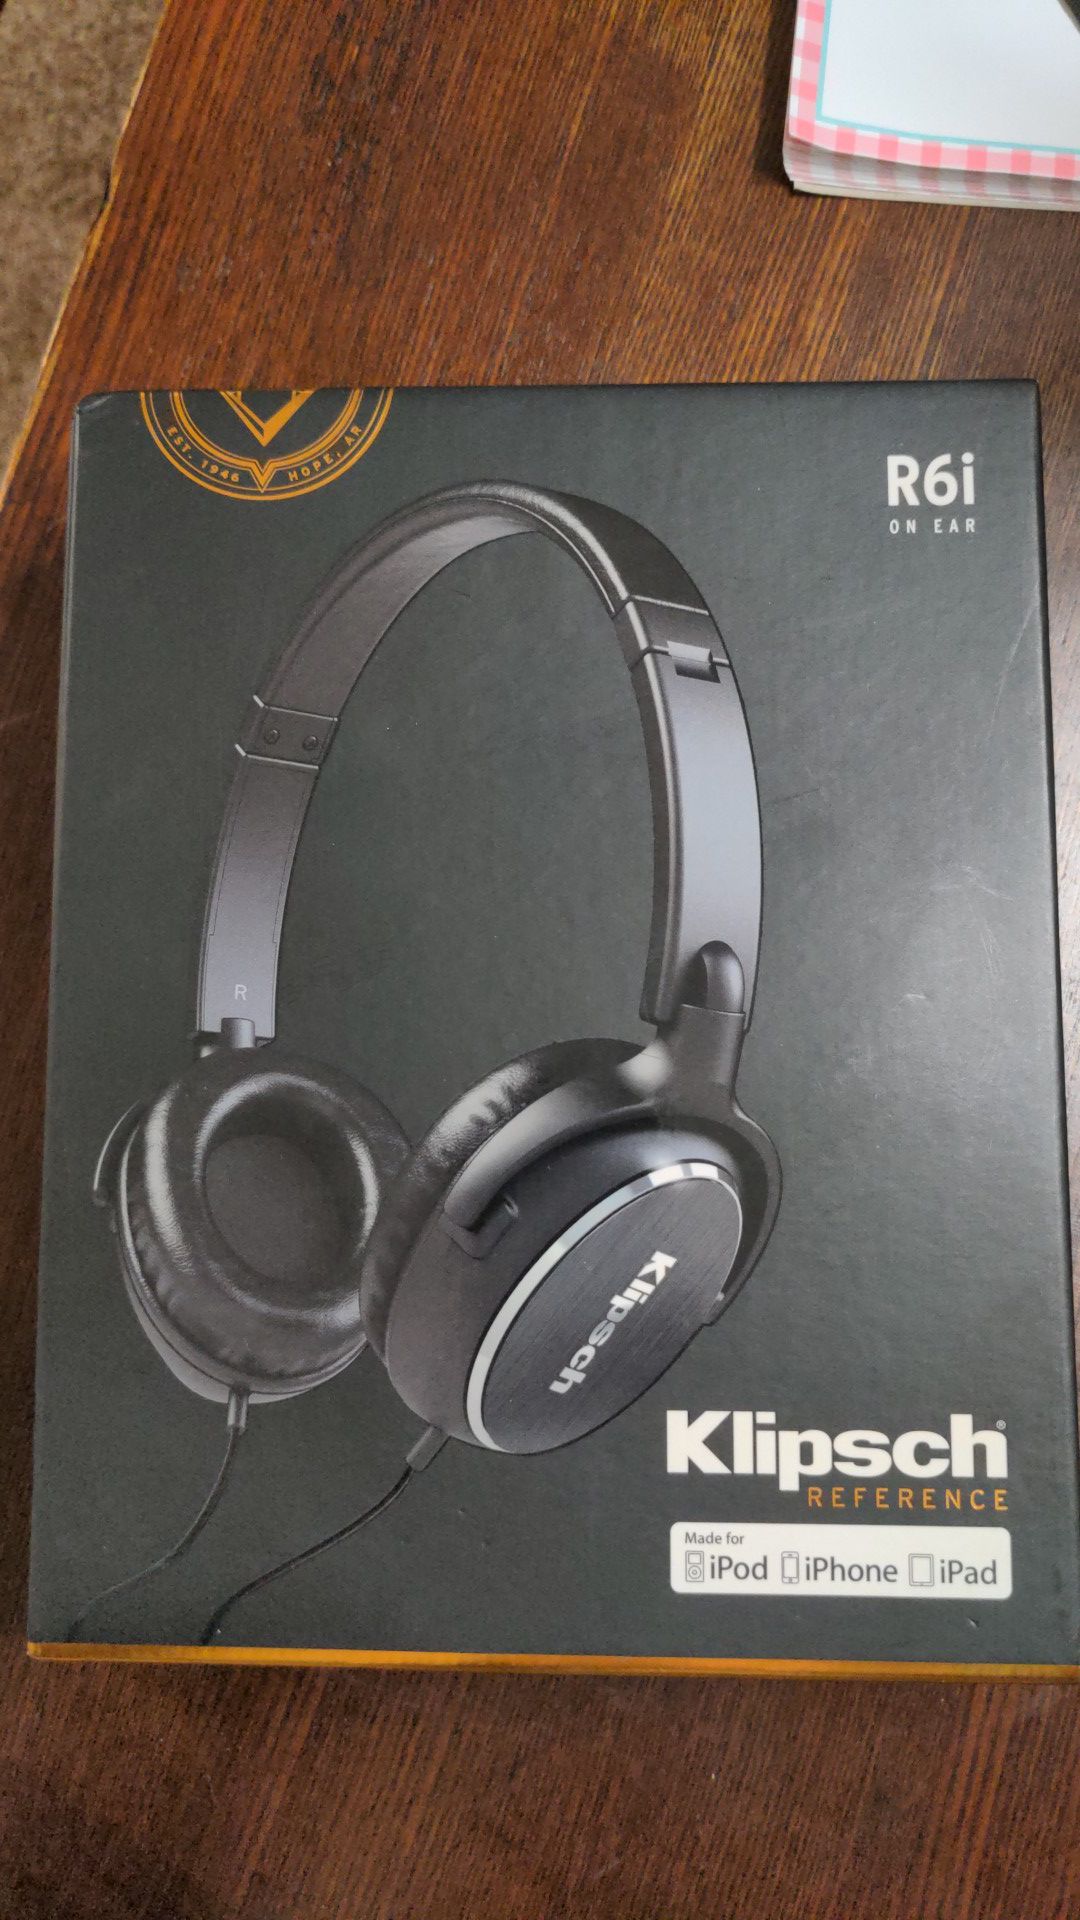 Klipsch Headphones R6i on ear